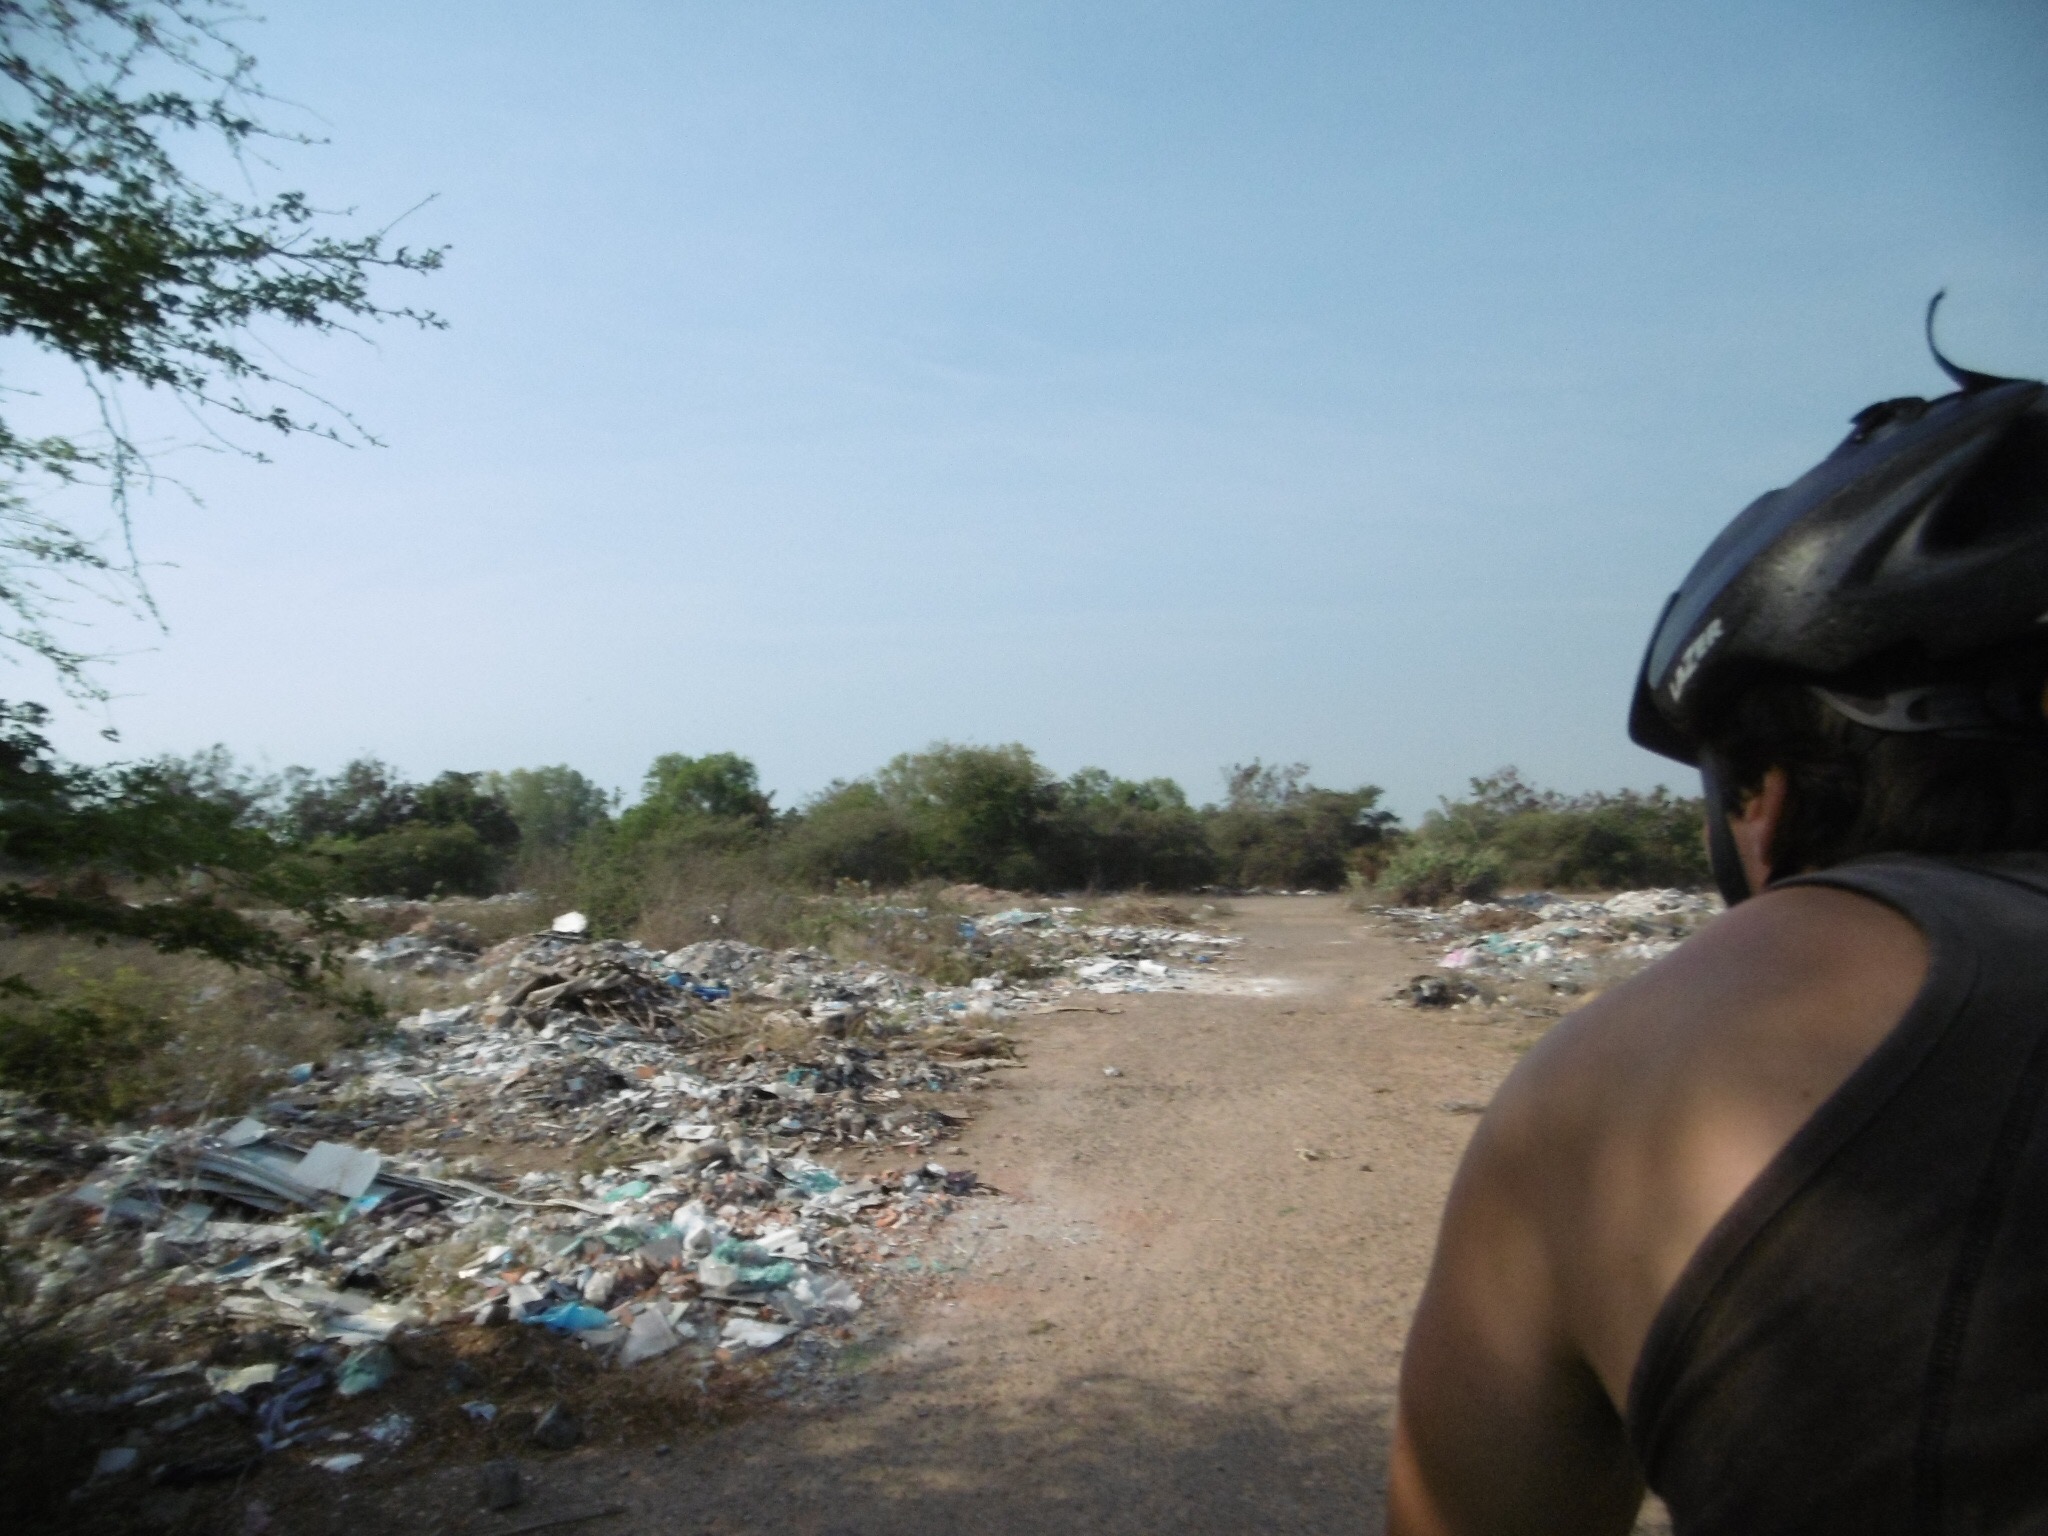 A rubbish-filled road in Vietnam